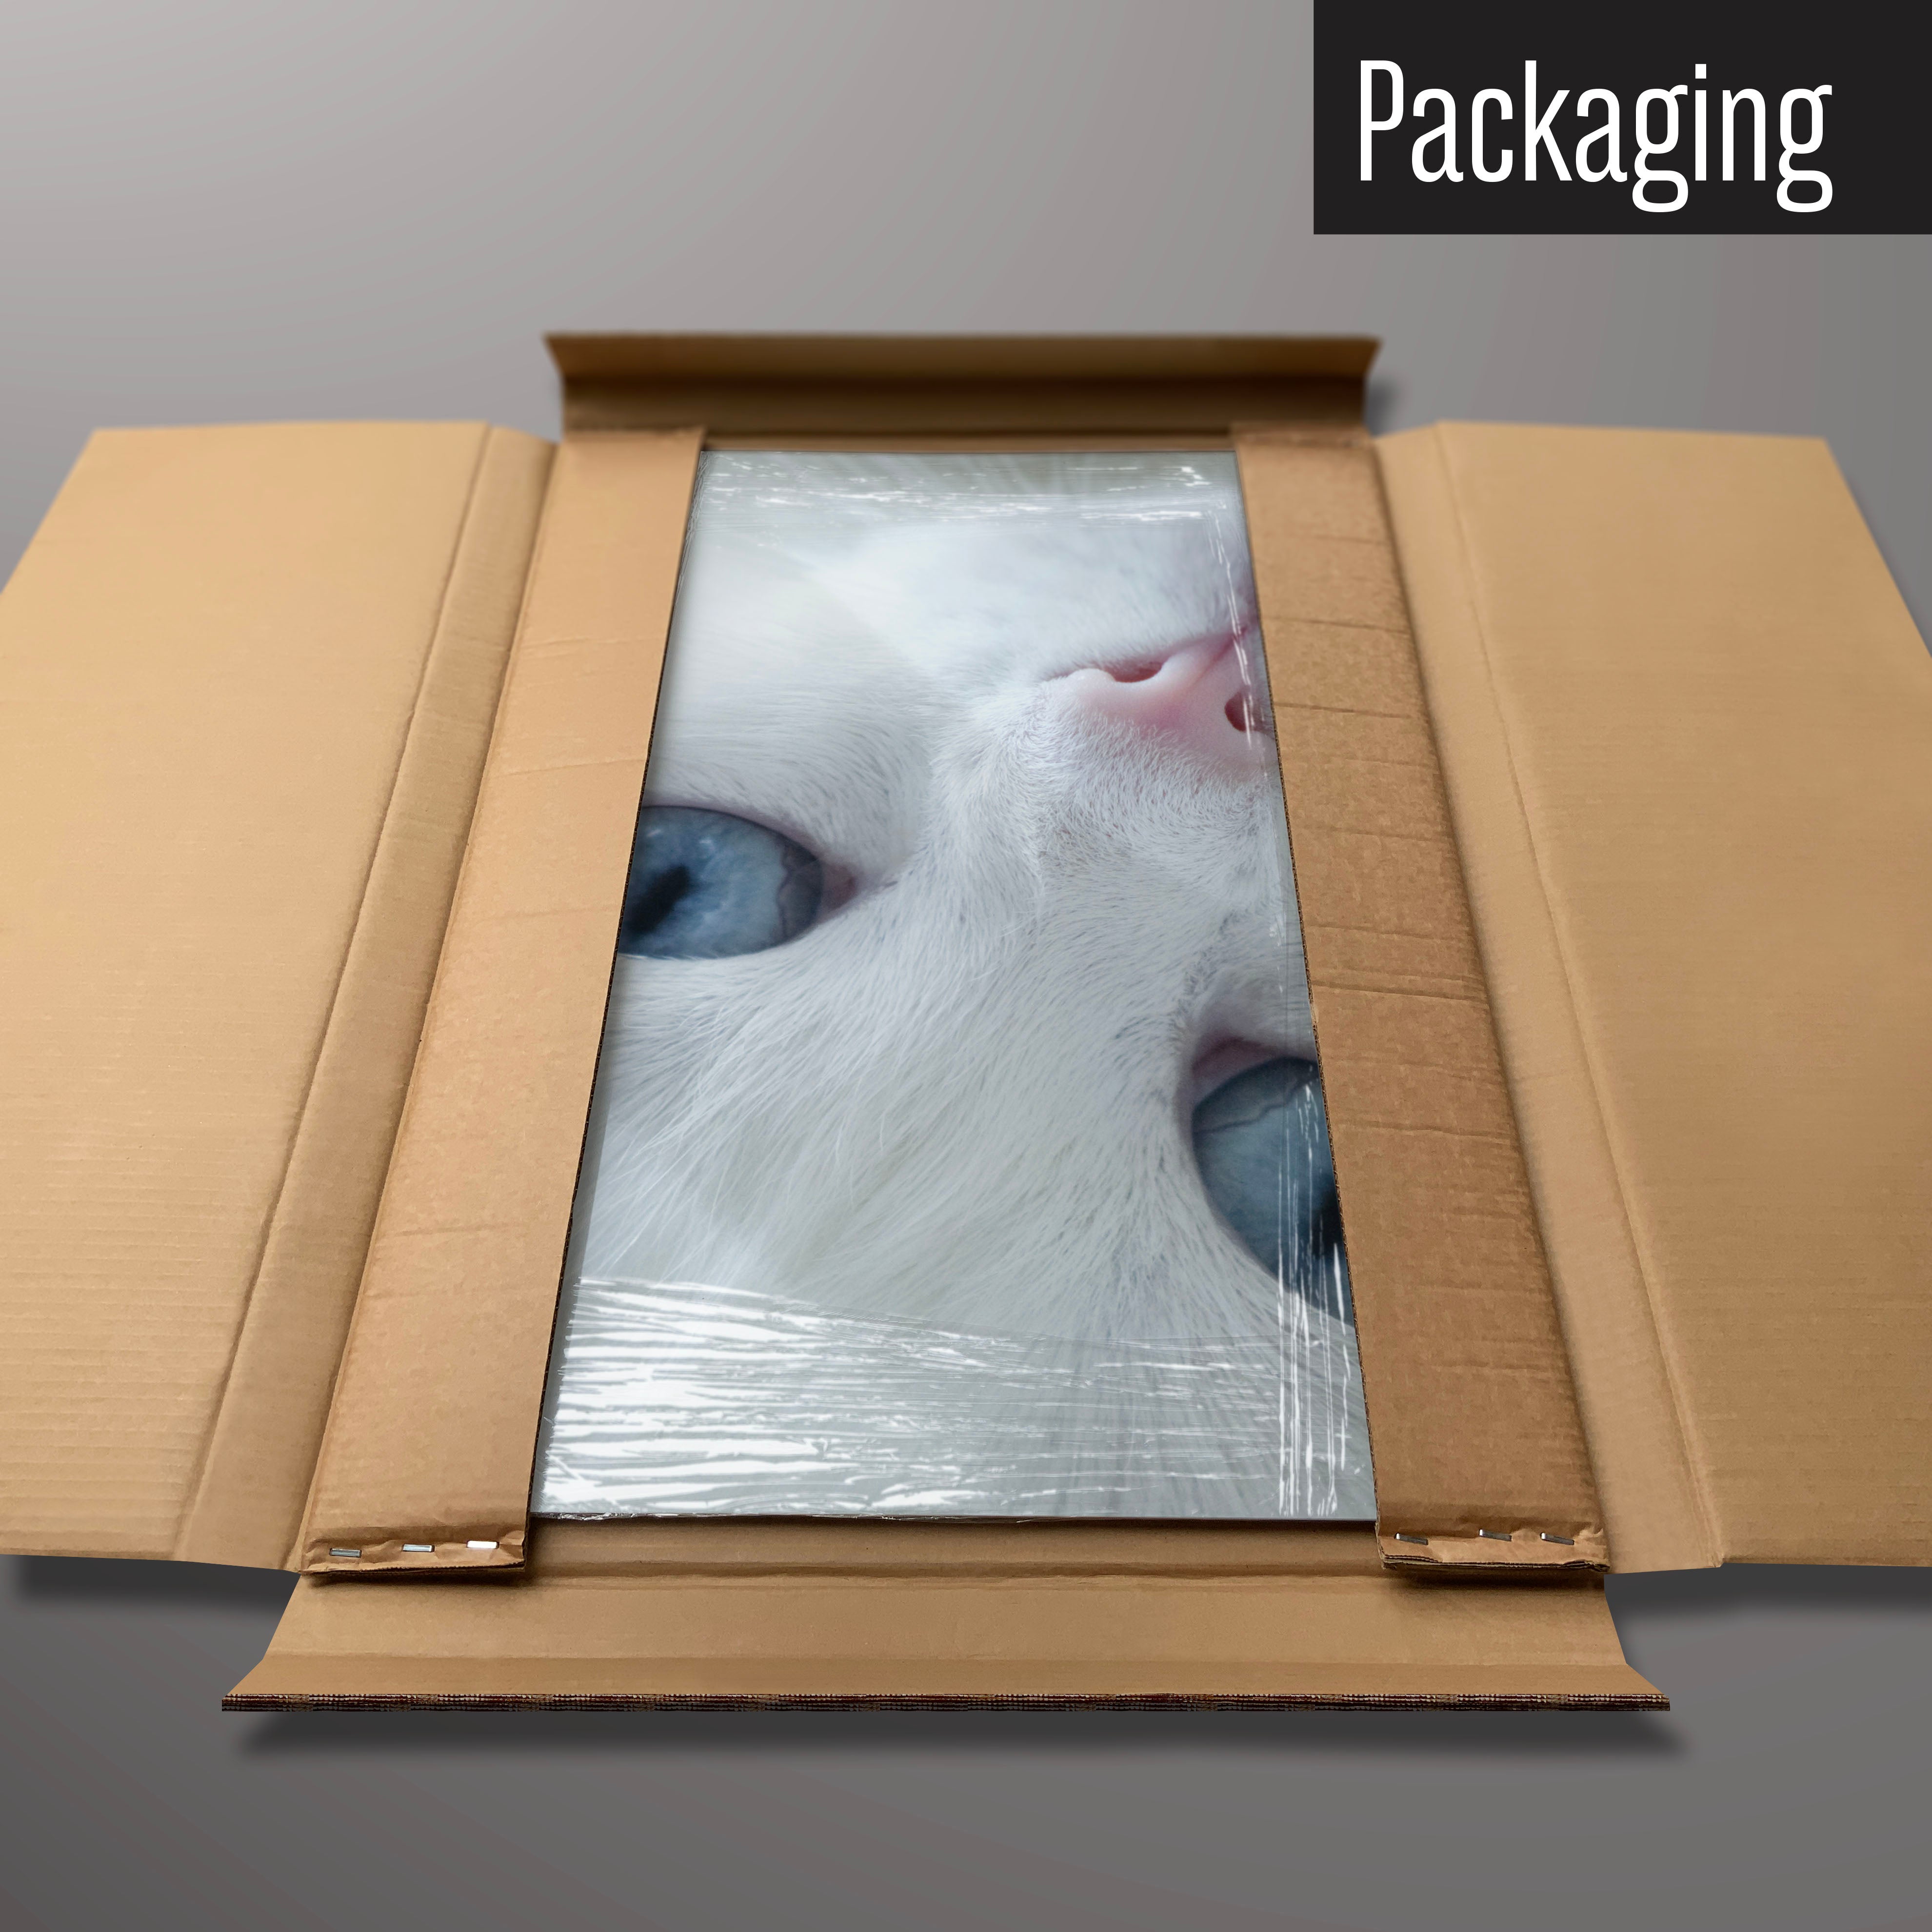 A white cat magnetic board in it’s cardboard packaging